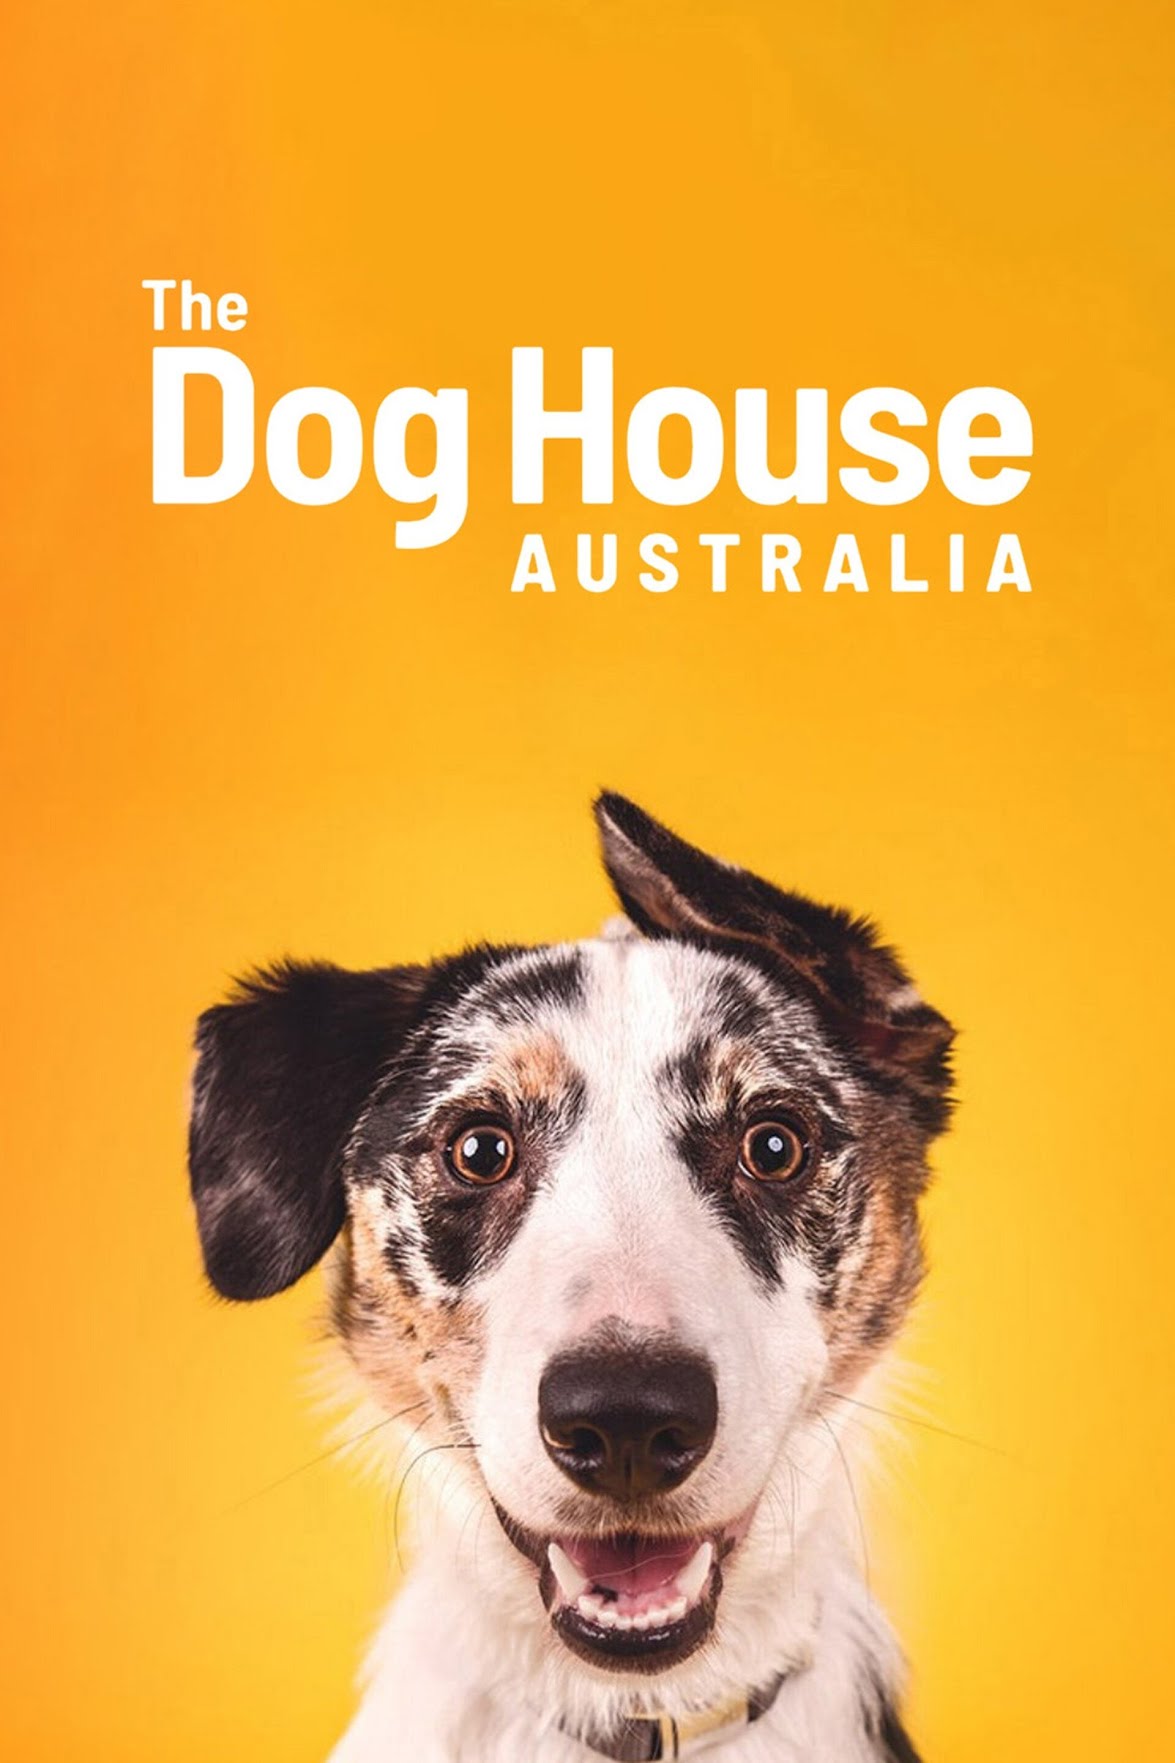 The Dog House Australia 4X5